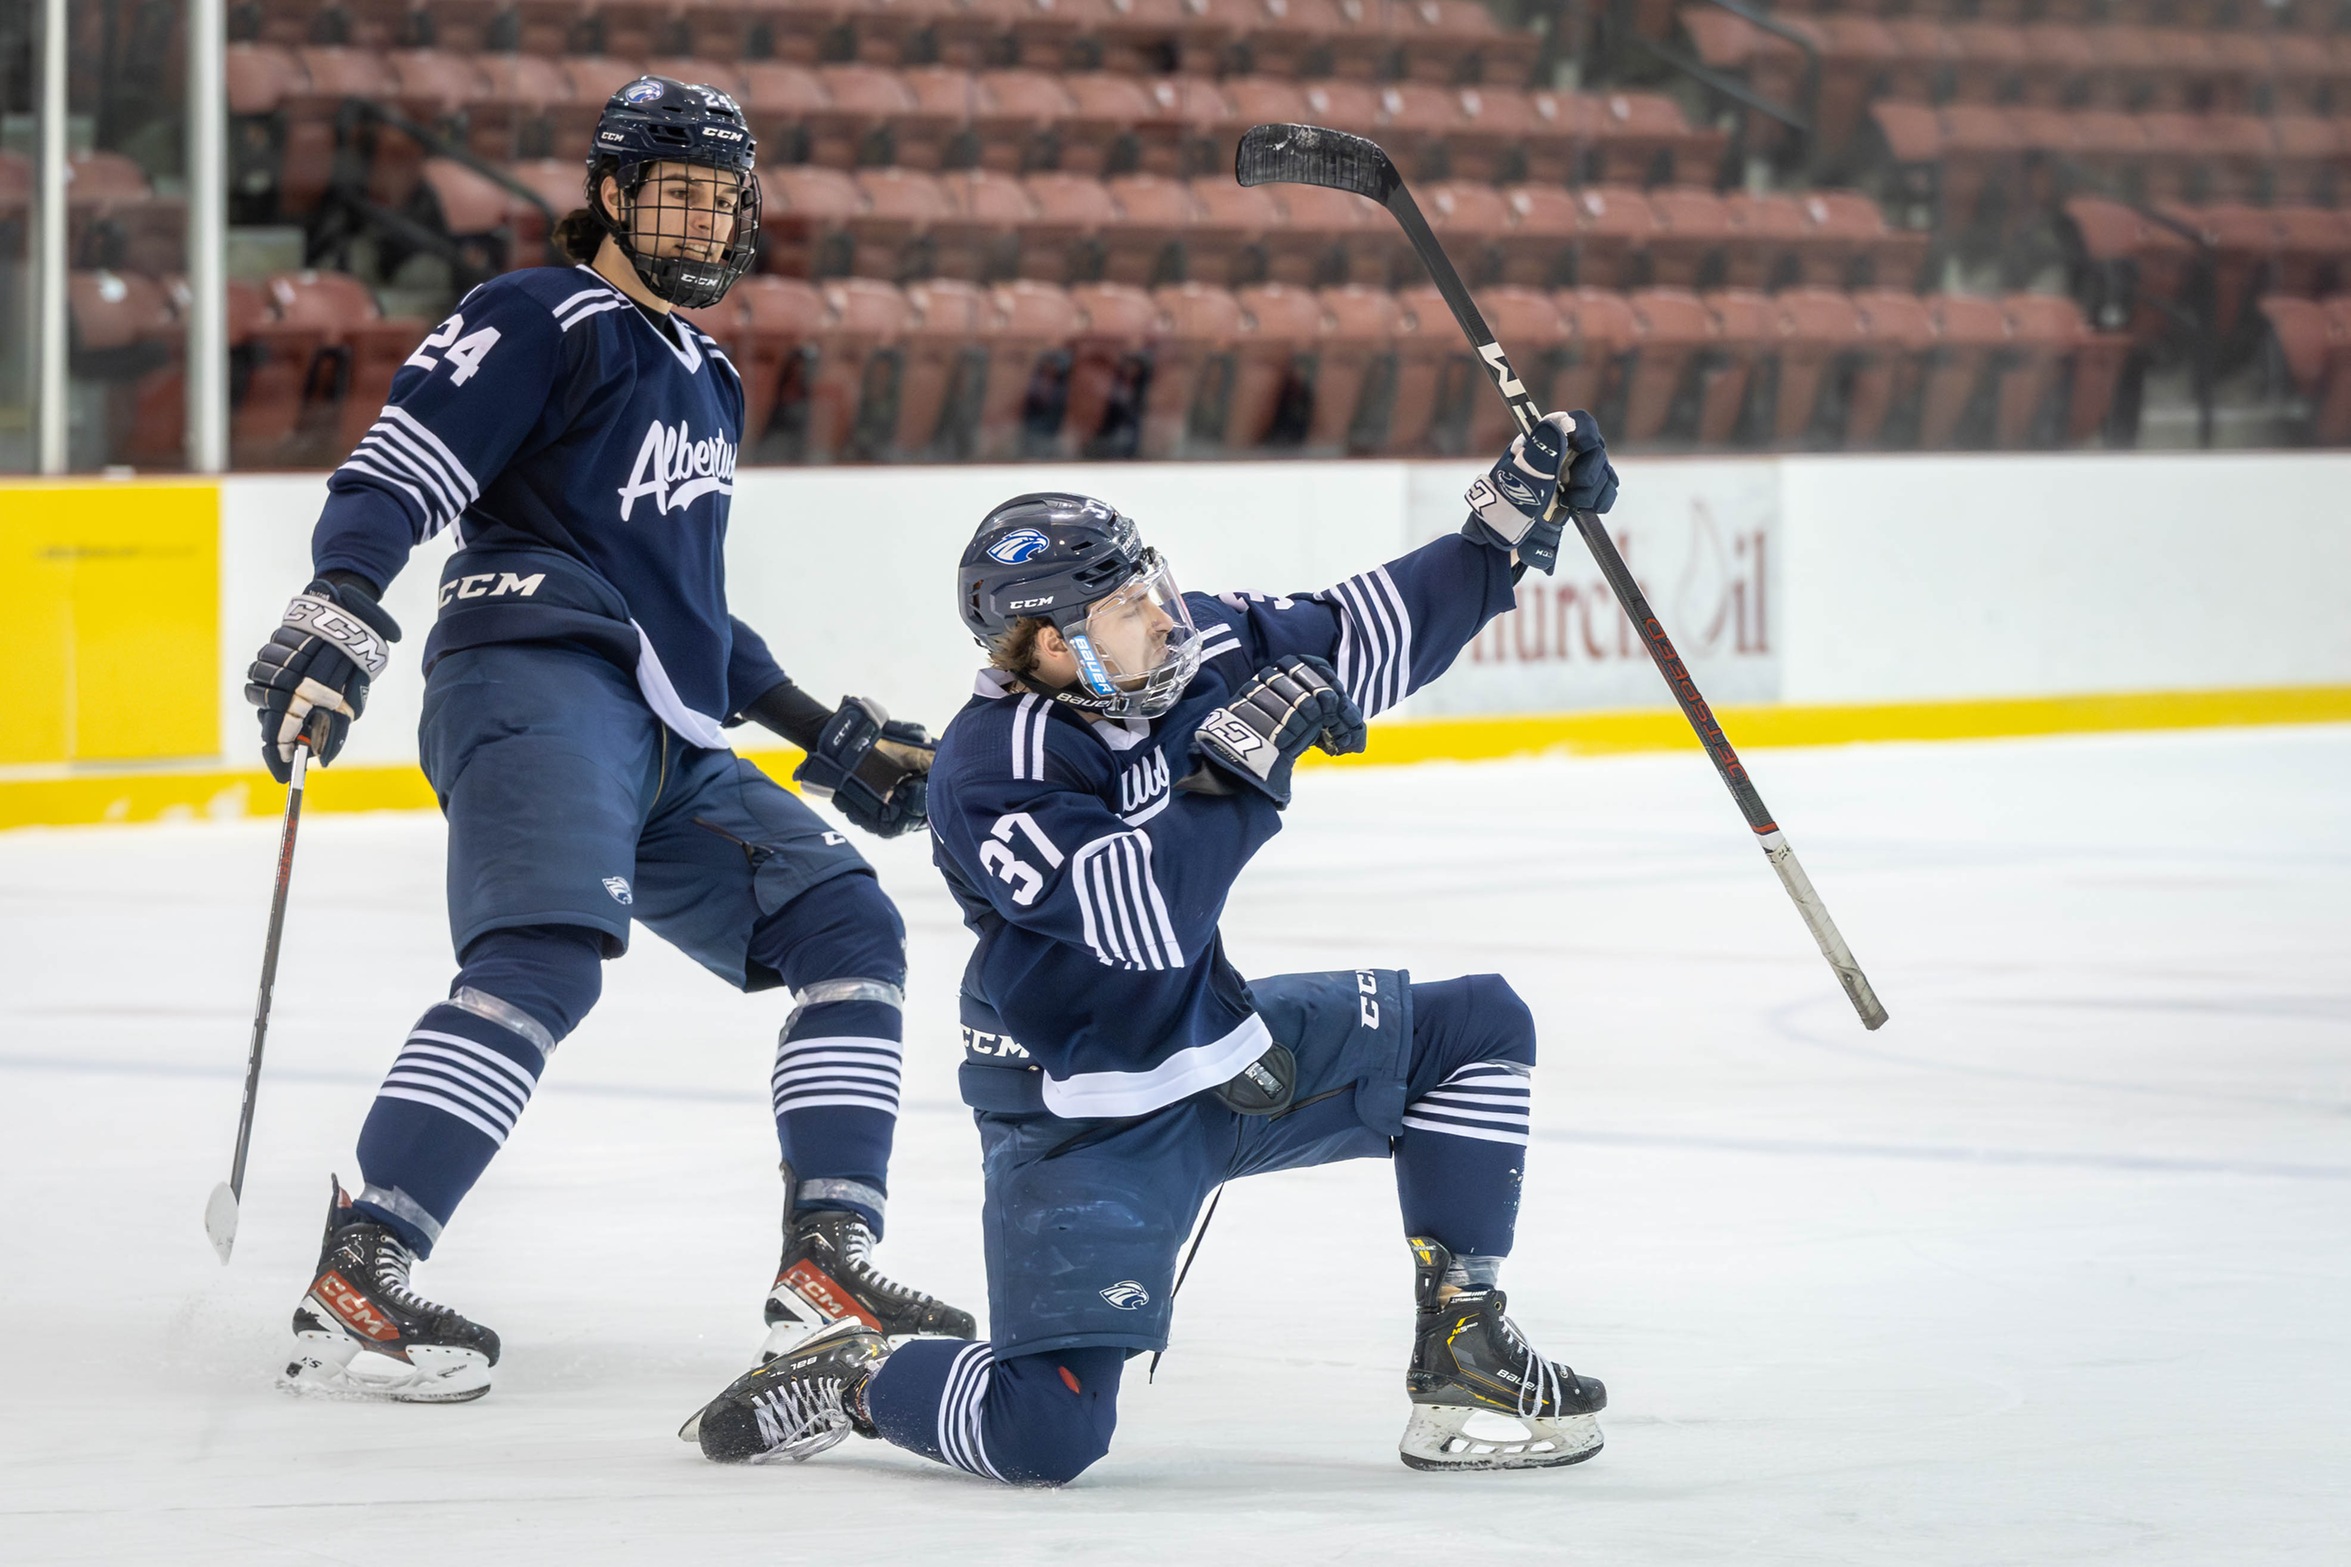 Three First-Period Goals Spur Men's Ice Hockey To Win Over Nazareth